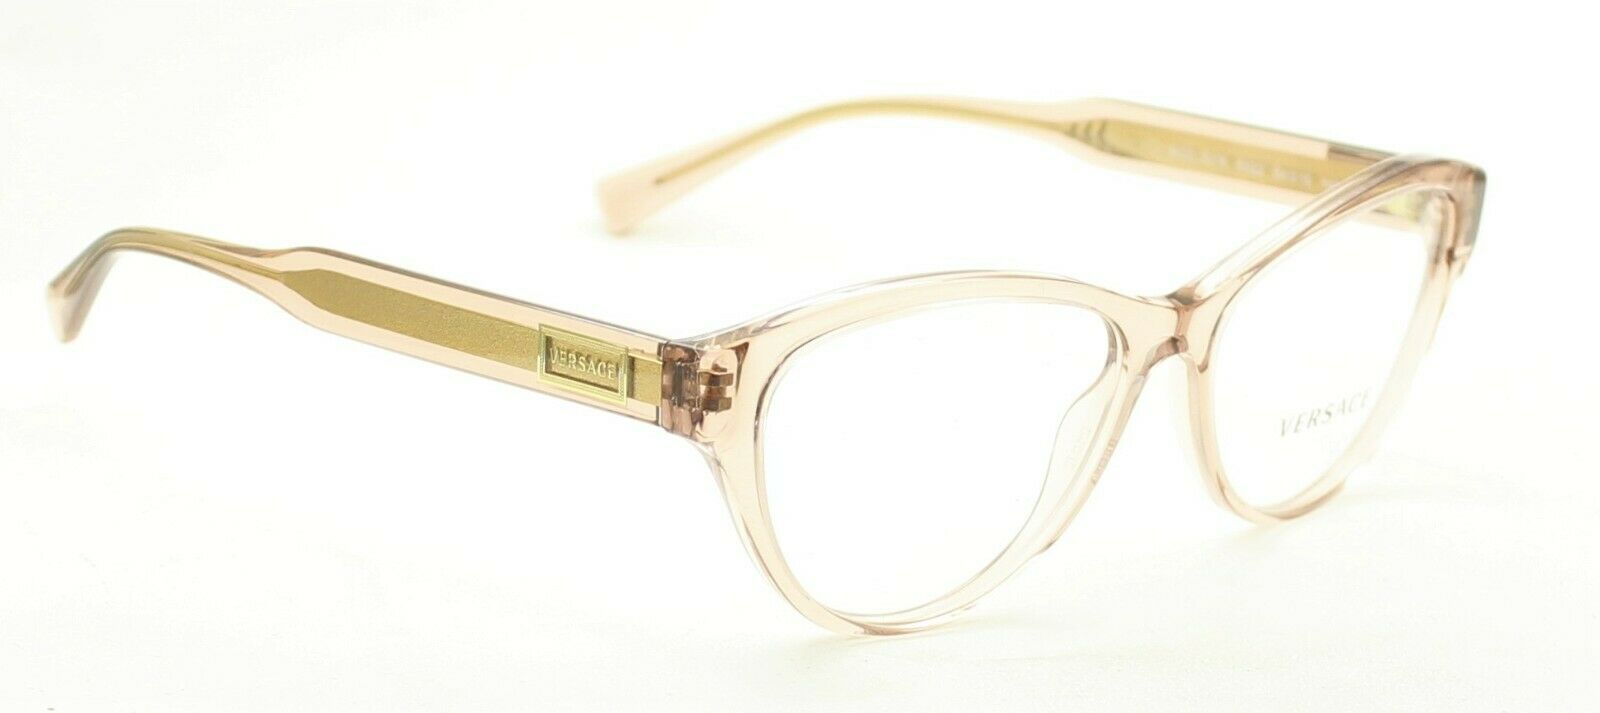 VERSACE 3276 5322 54mm Eyewear FRAMES Glasses RX Optical Eyeglasses New - Italy